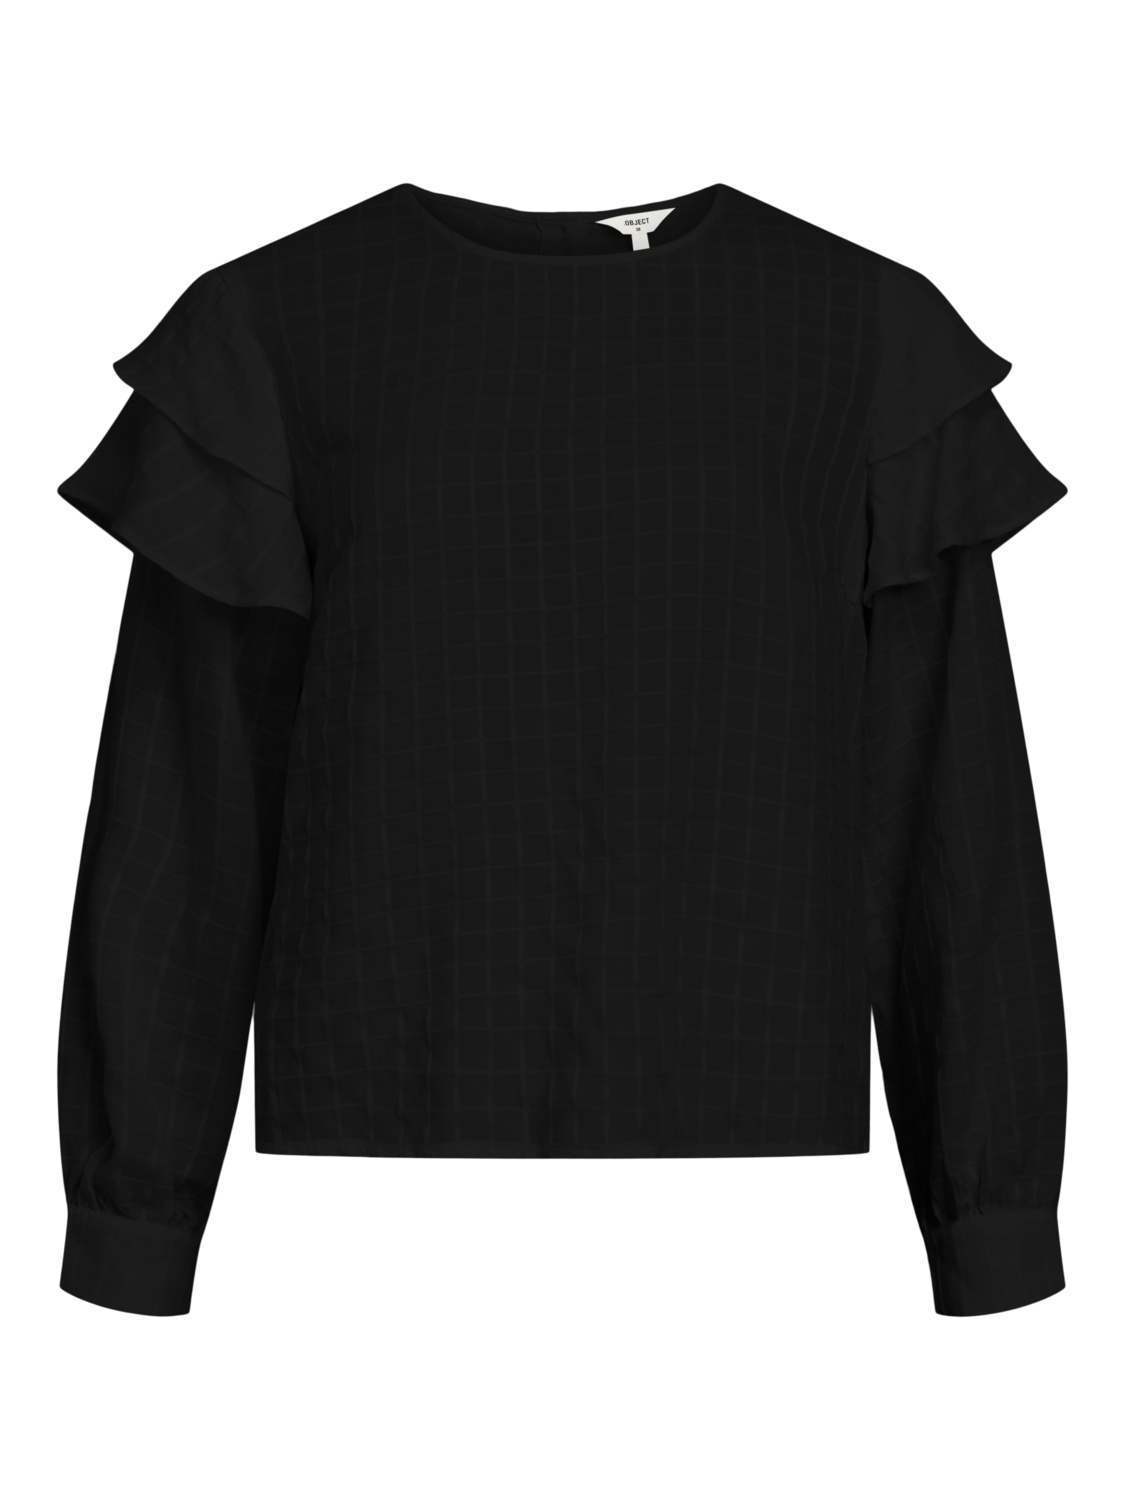 OBJVIVI T-Shirts & Tops - Black